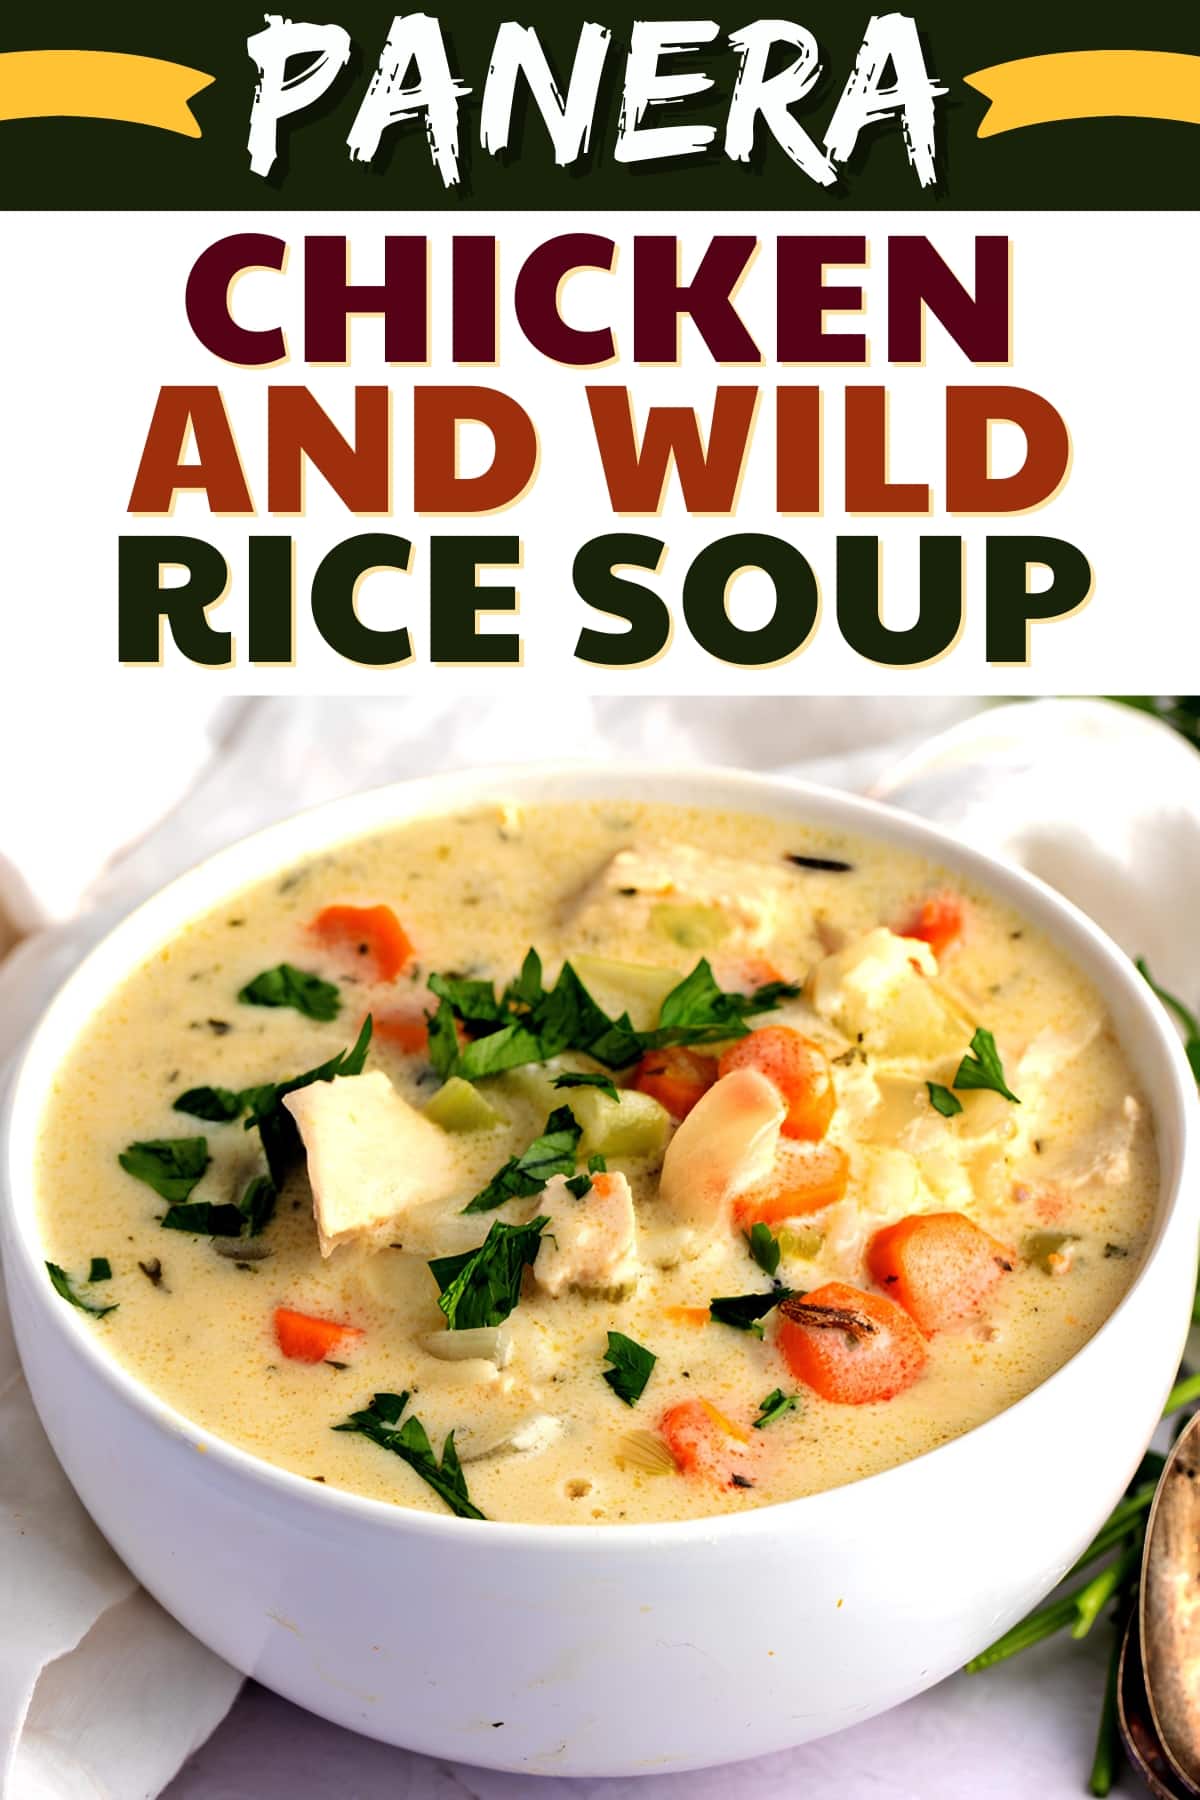 Copycat Panera Chicken & Wild Rice Soup